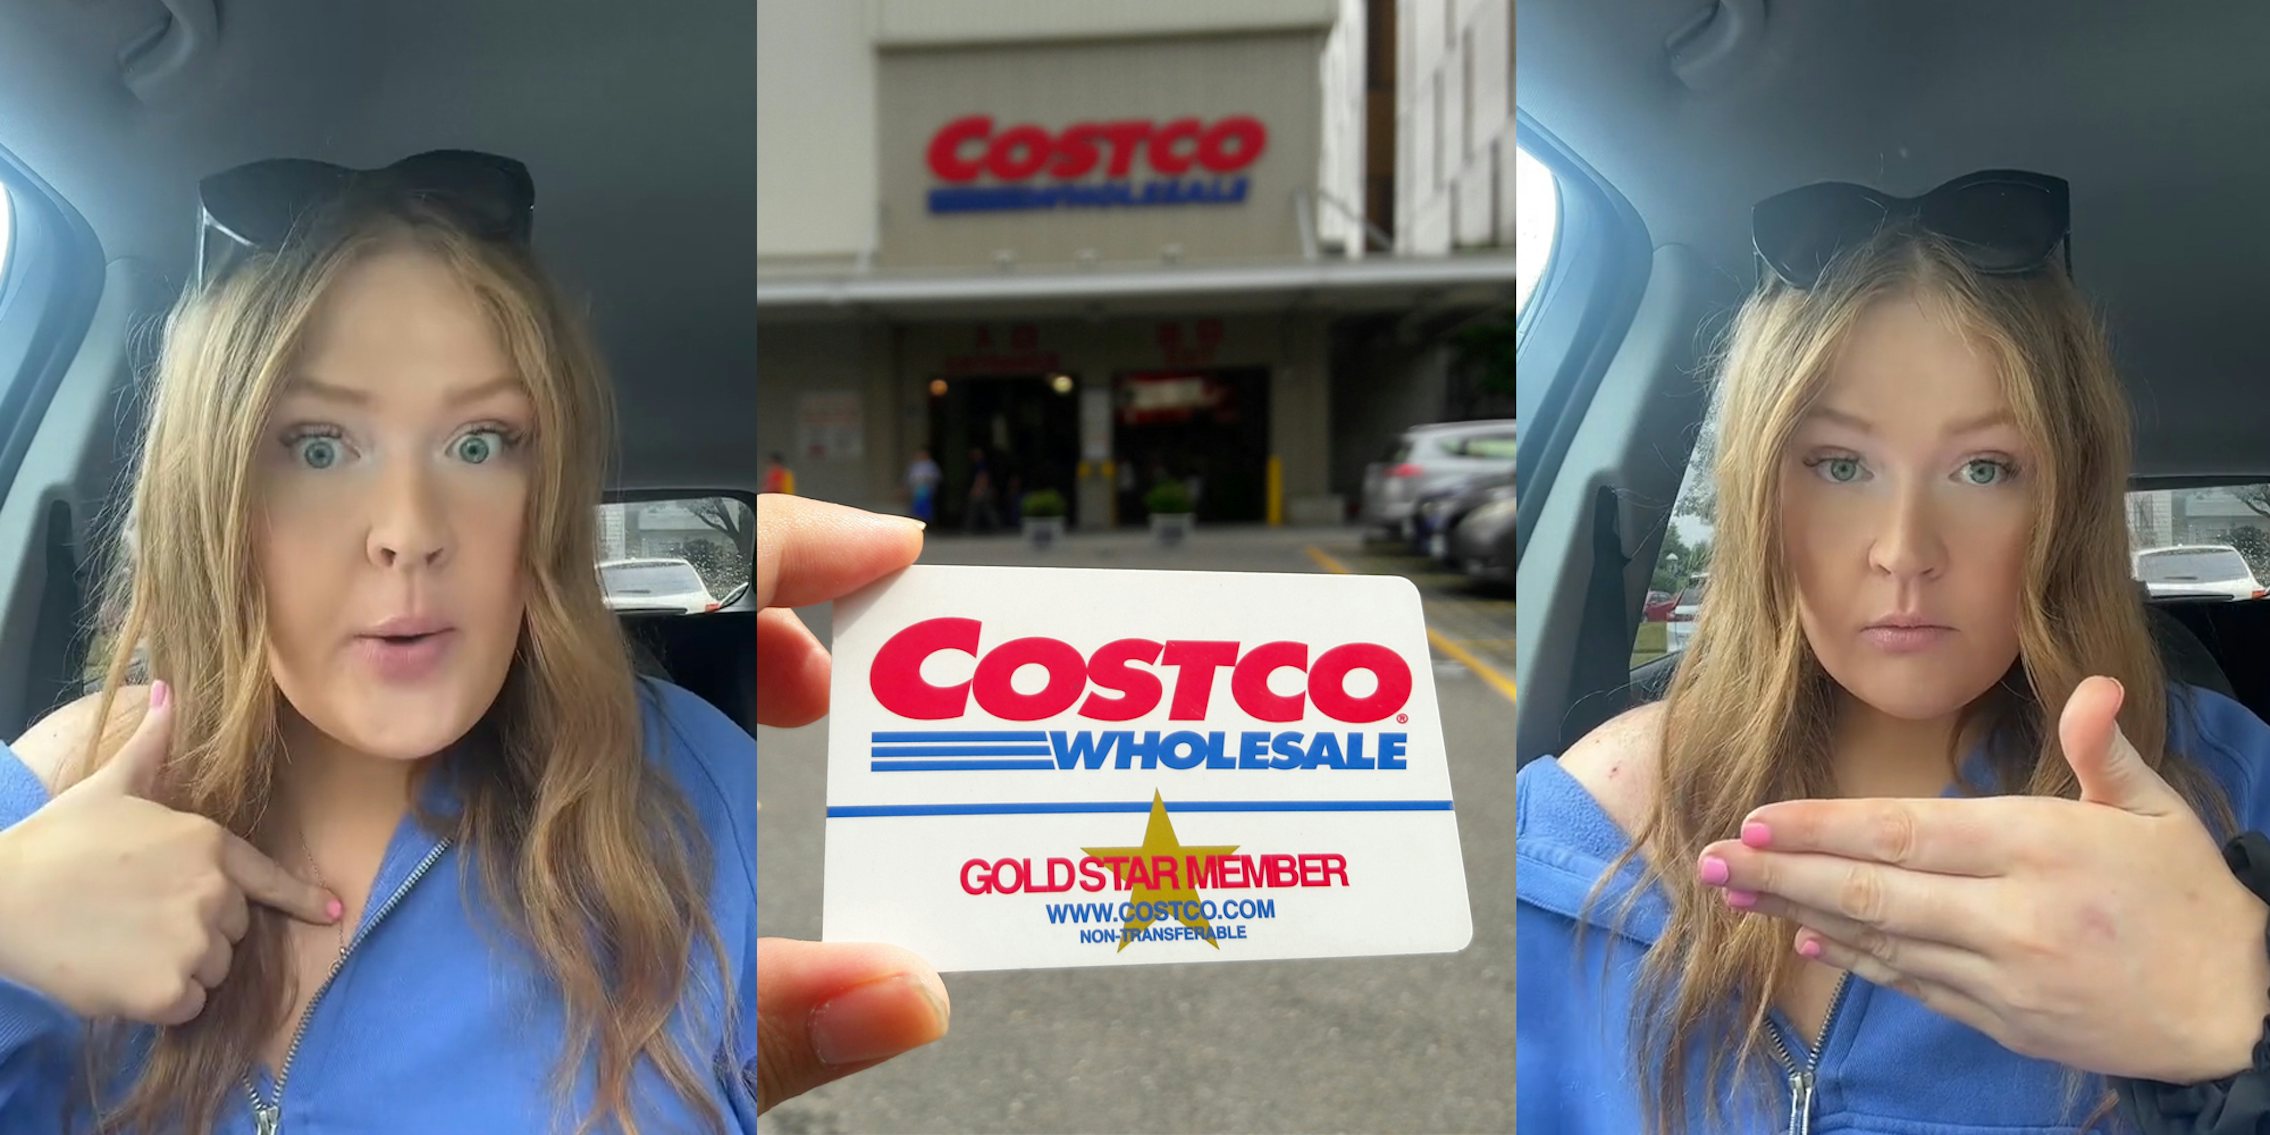 Costco customer speaking in car (l) Costco member holding card in front of blurred Costco (c) Costco customer speaking in car (r)